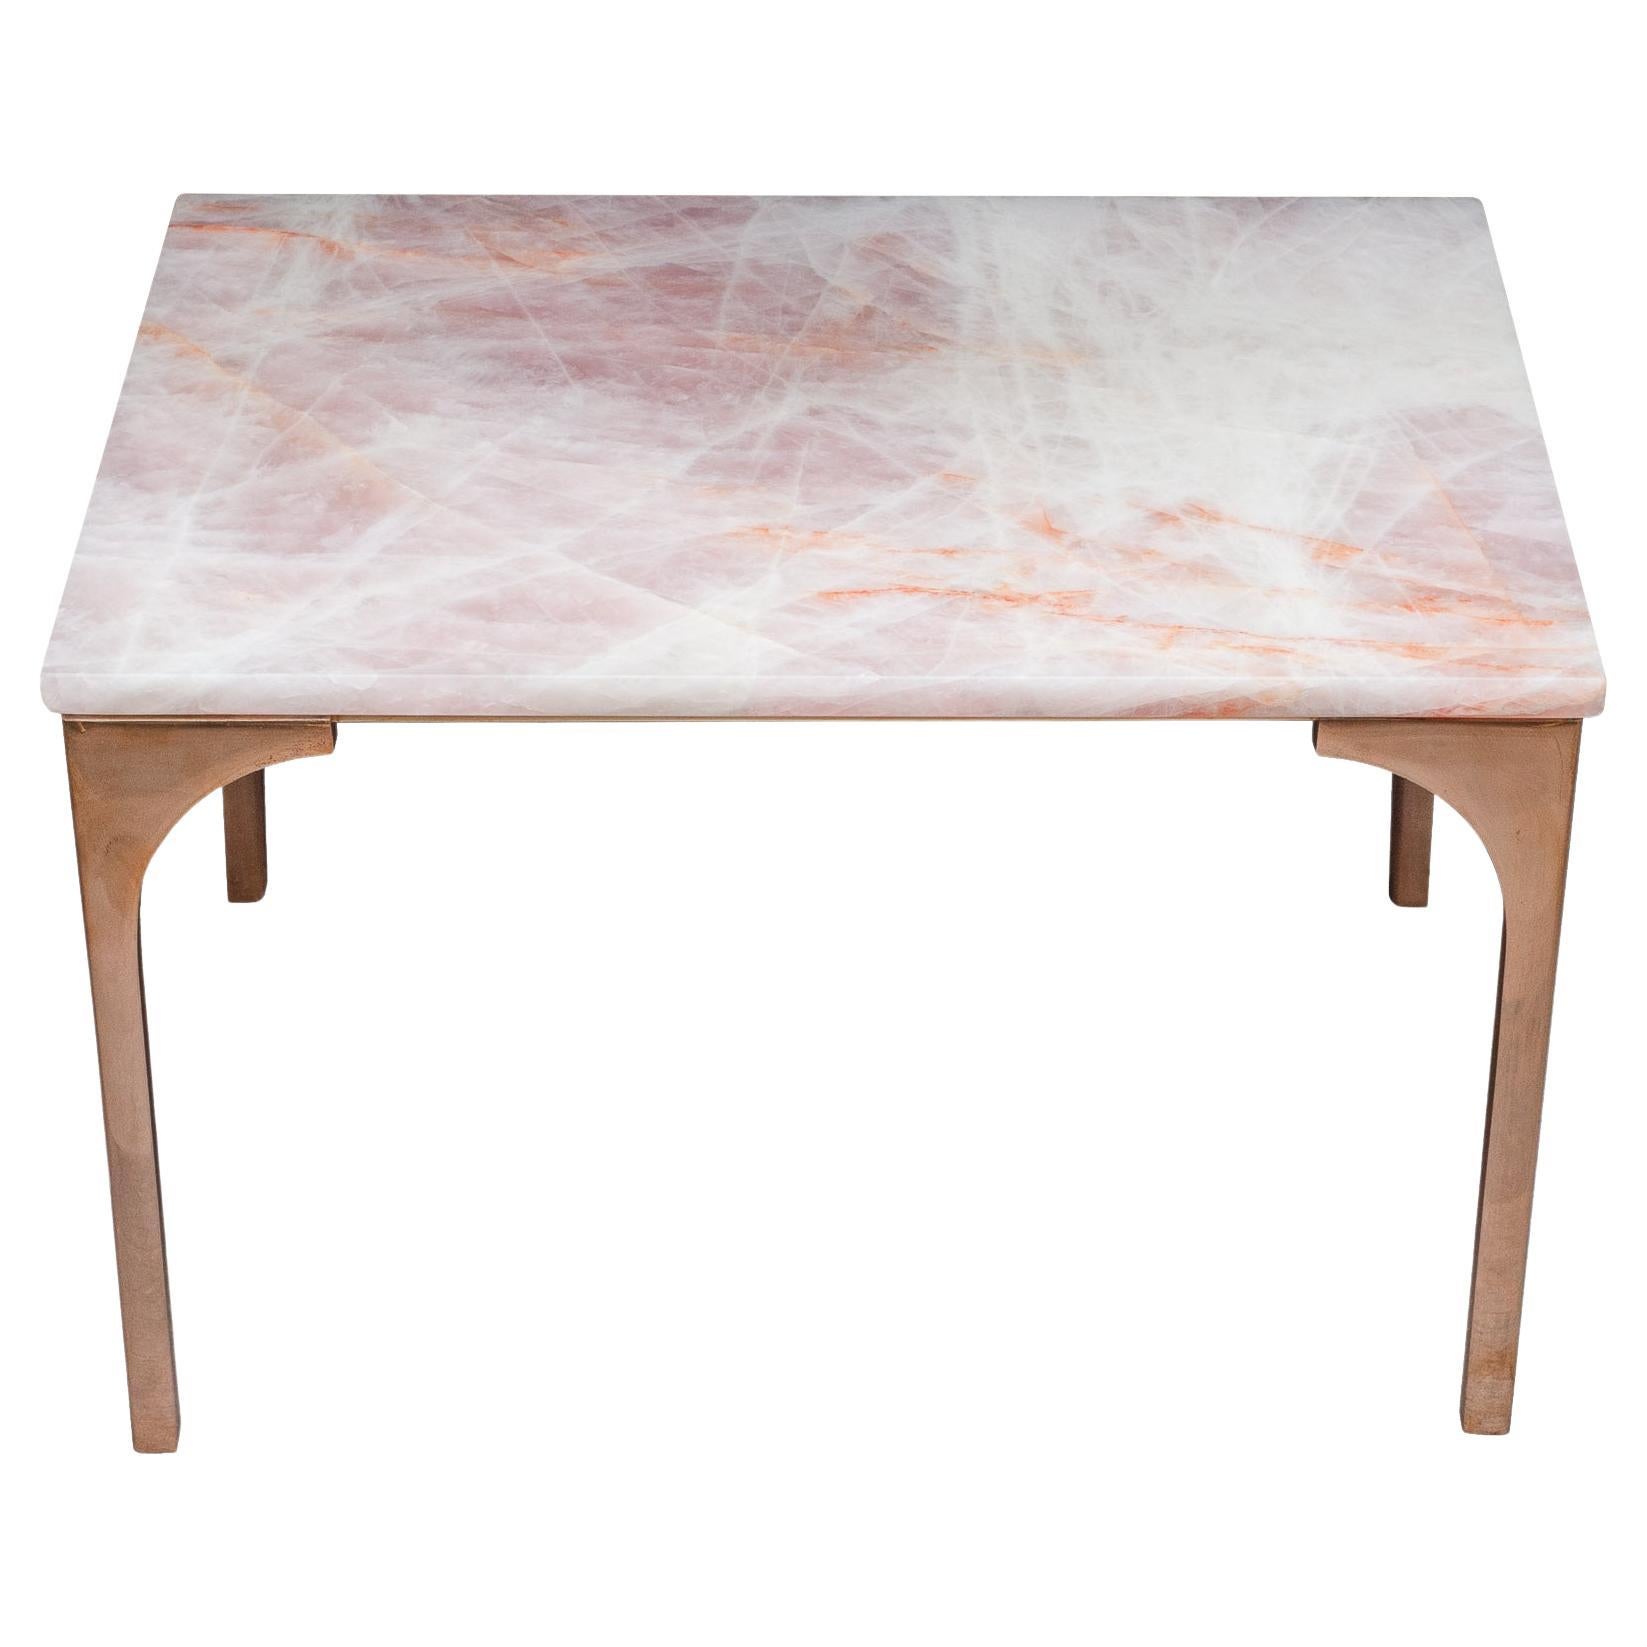 Studio Maison Nurita Pink Rose Quartz Table with Polished Poured Bronze Legs For Sale